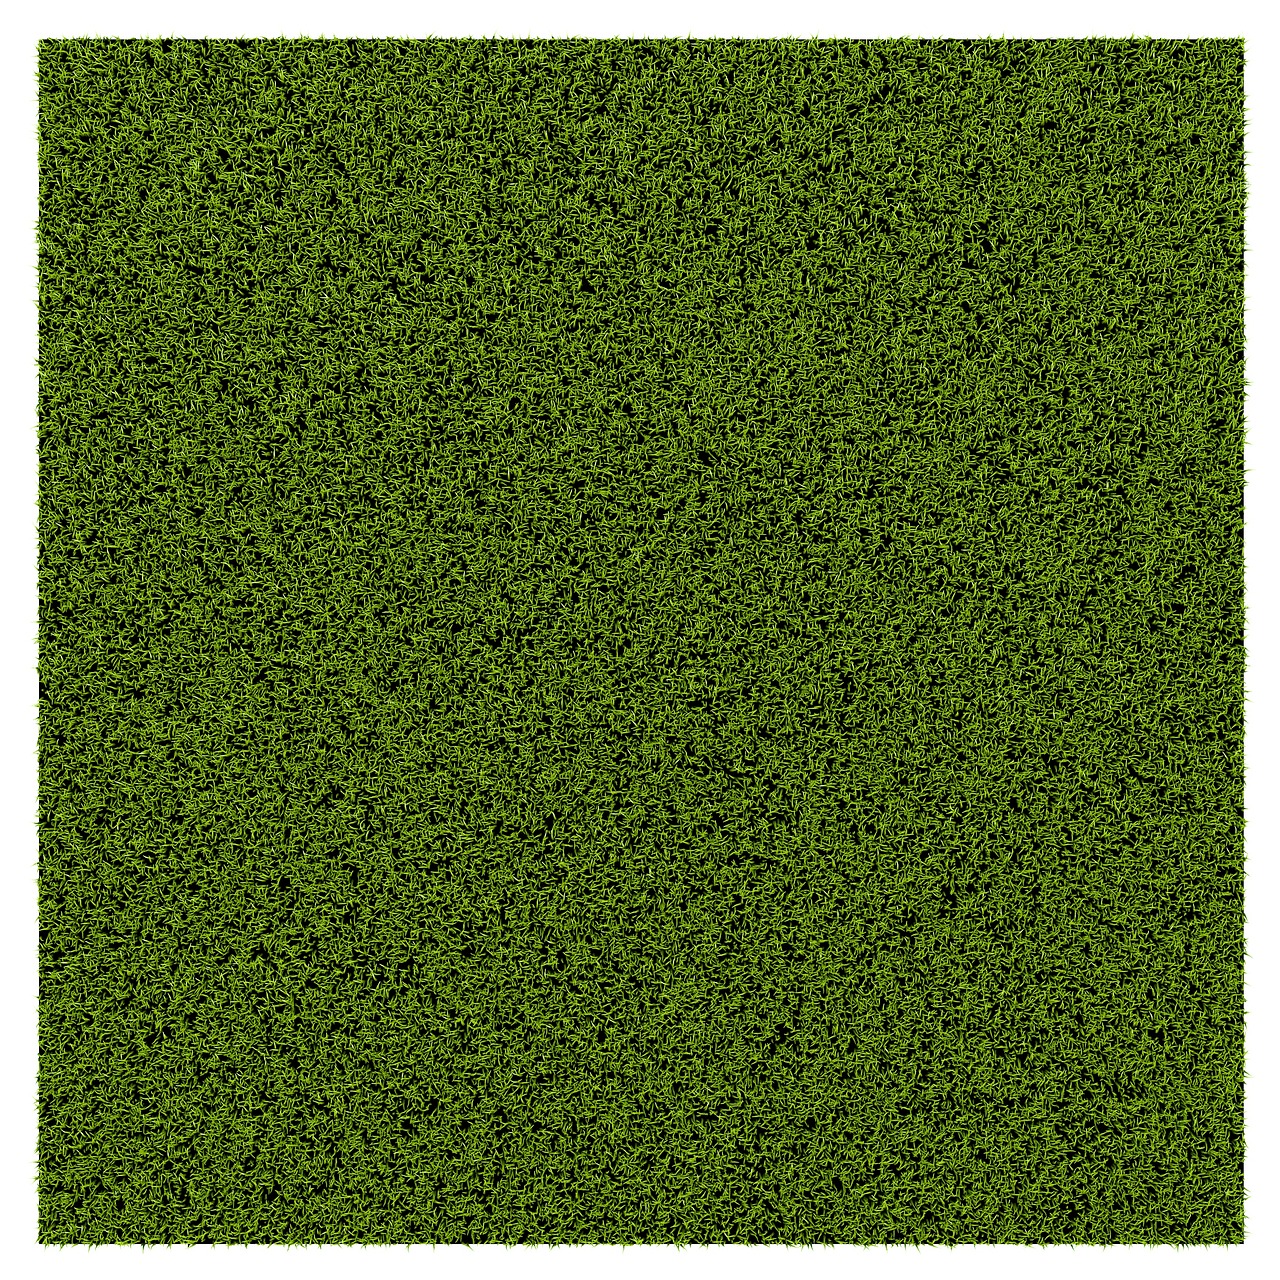 grass carpet texture free photo